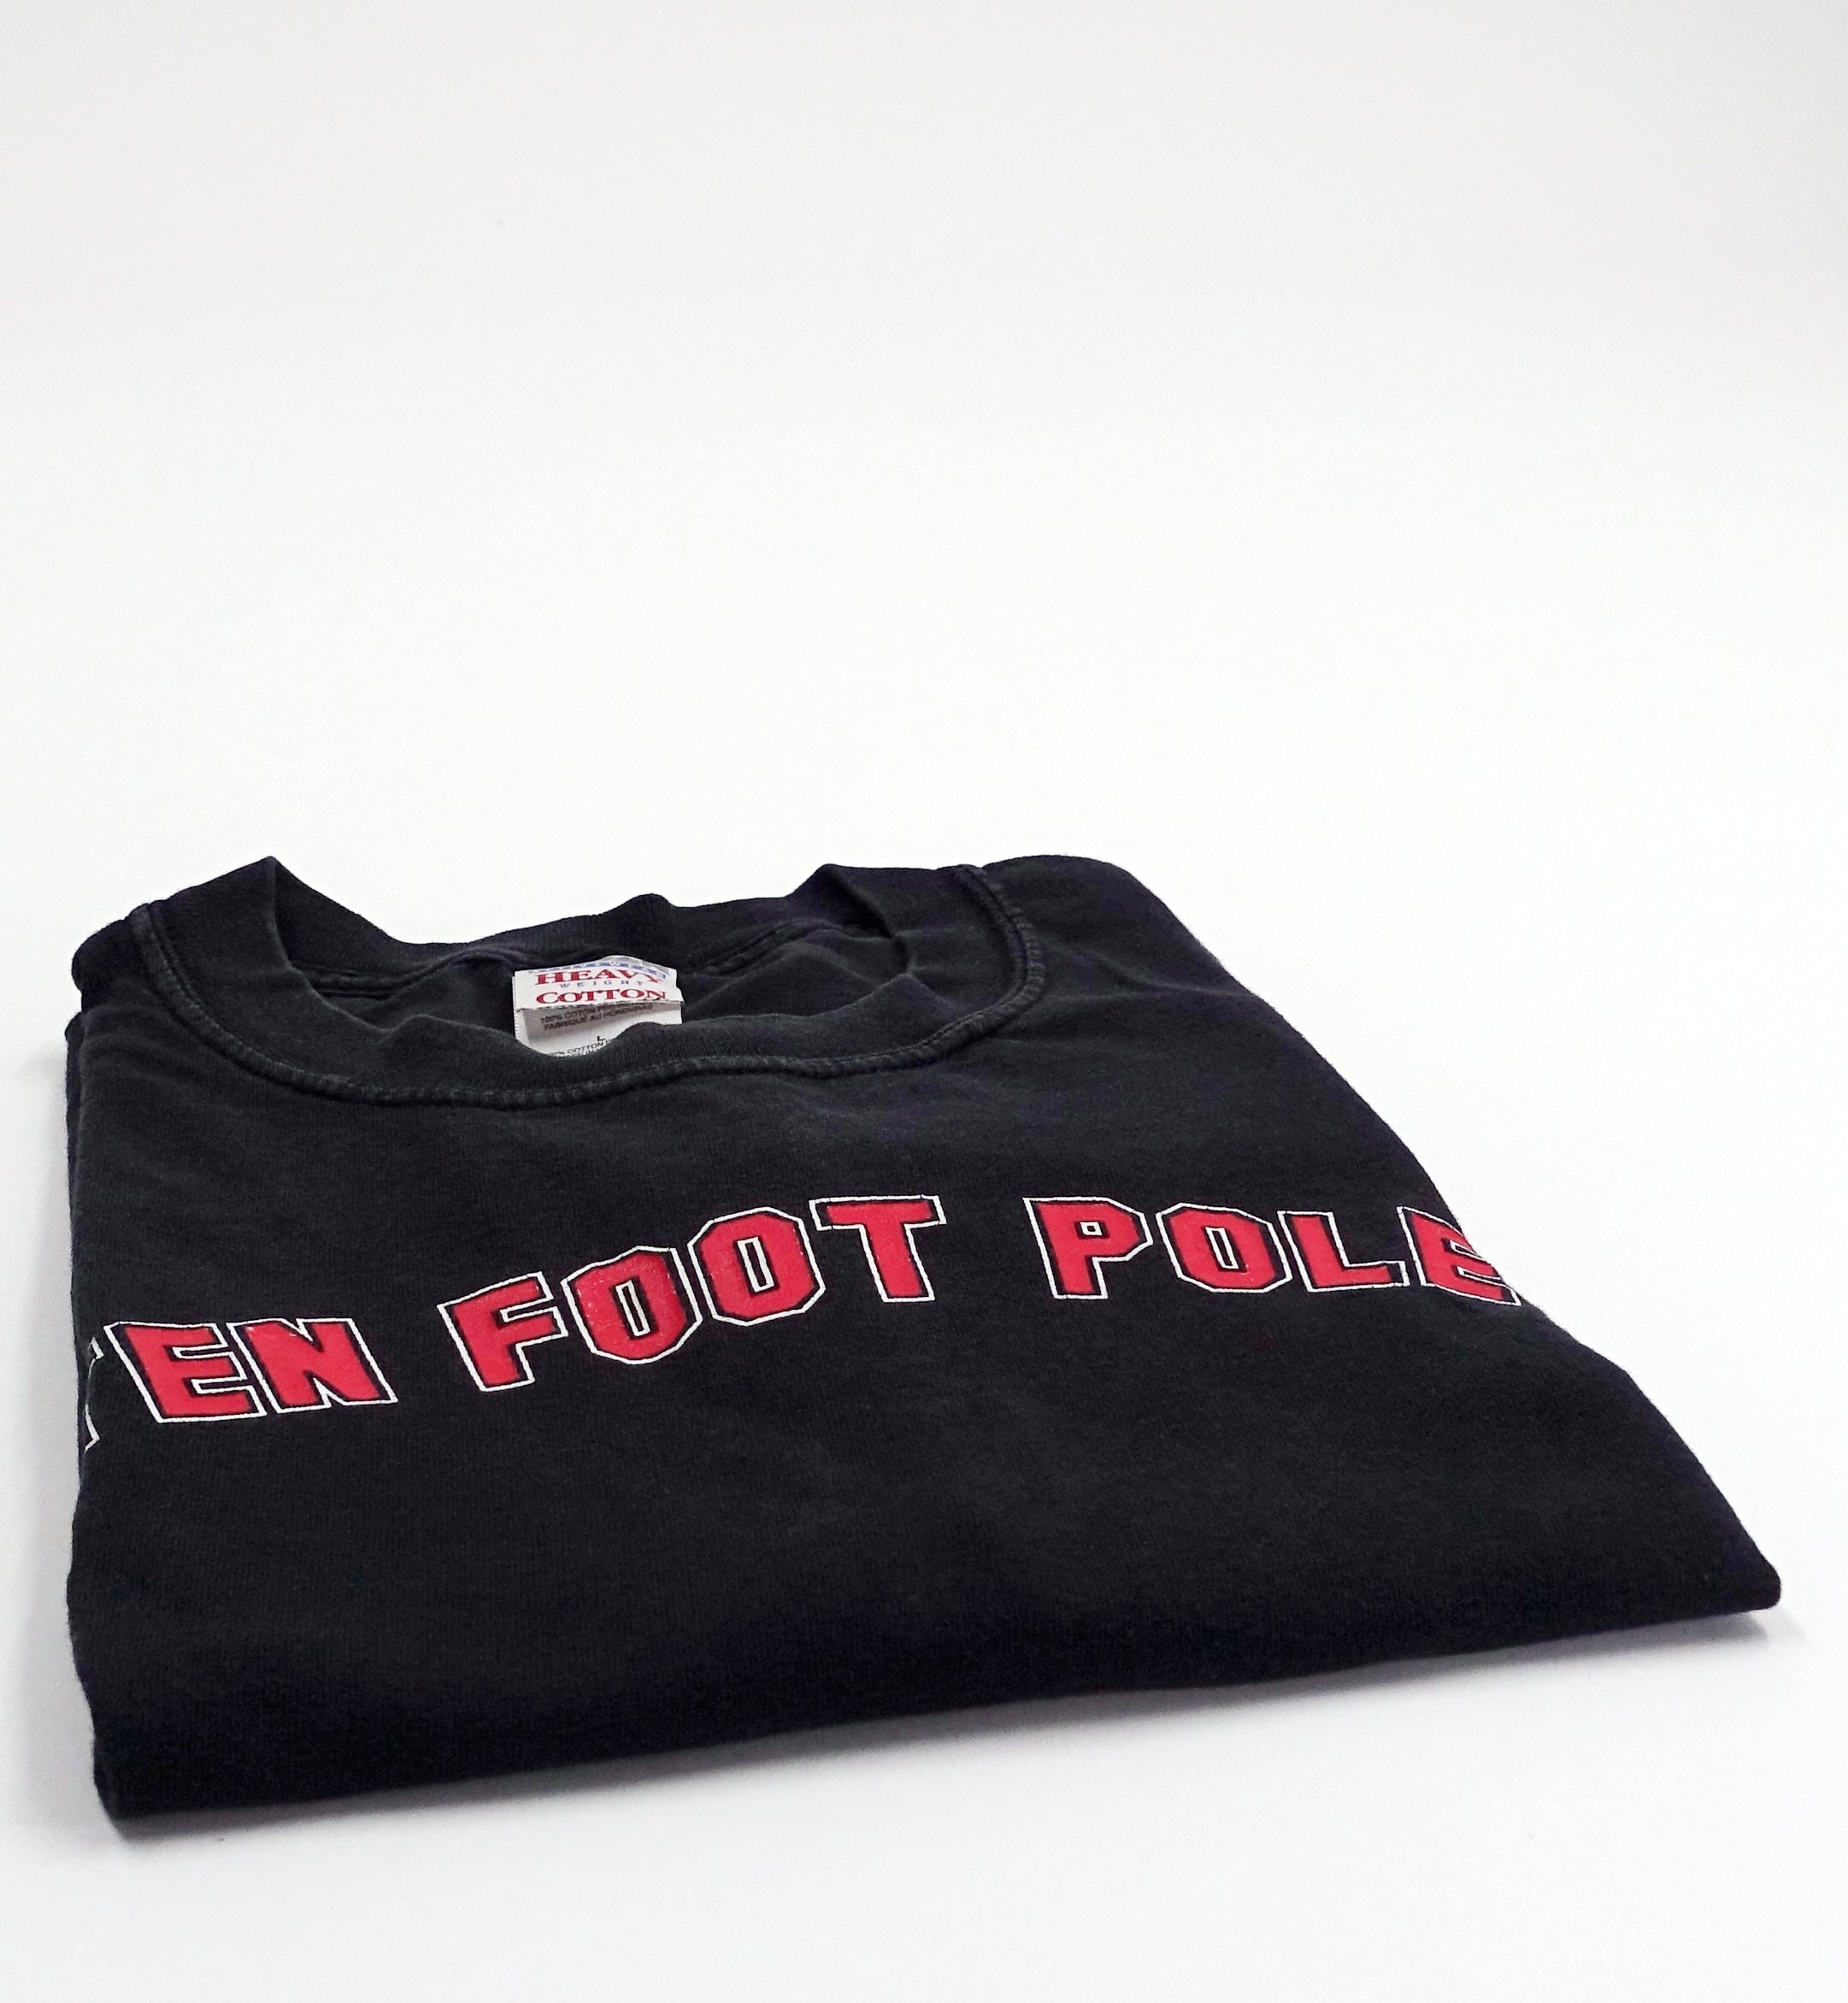 Ten Foot Pole ‎– Band Photo 90's Tour Shirt Size Large